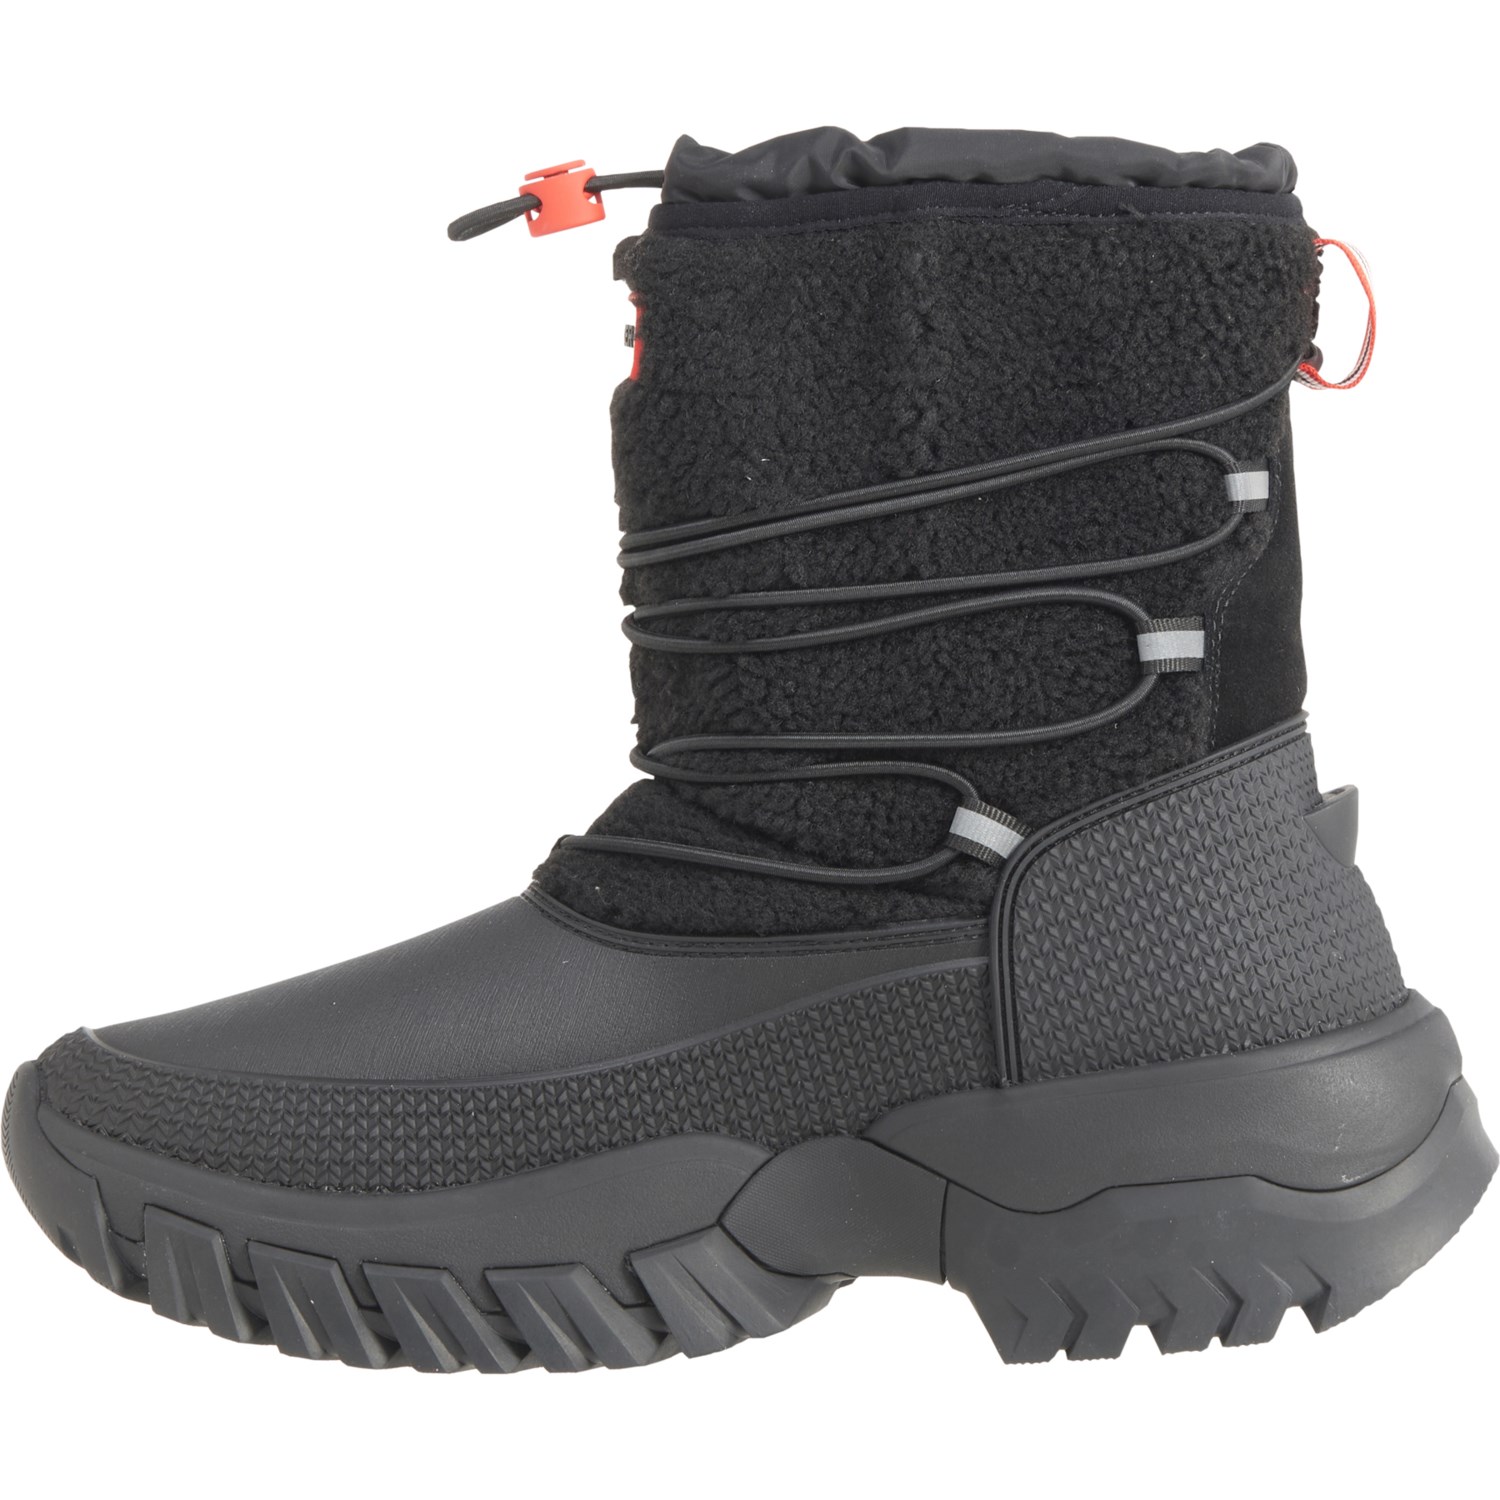 HUNTER Wanderer Short Sherpa Snow Boots (For Women) - Save 46%